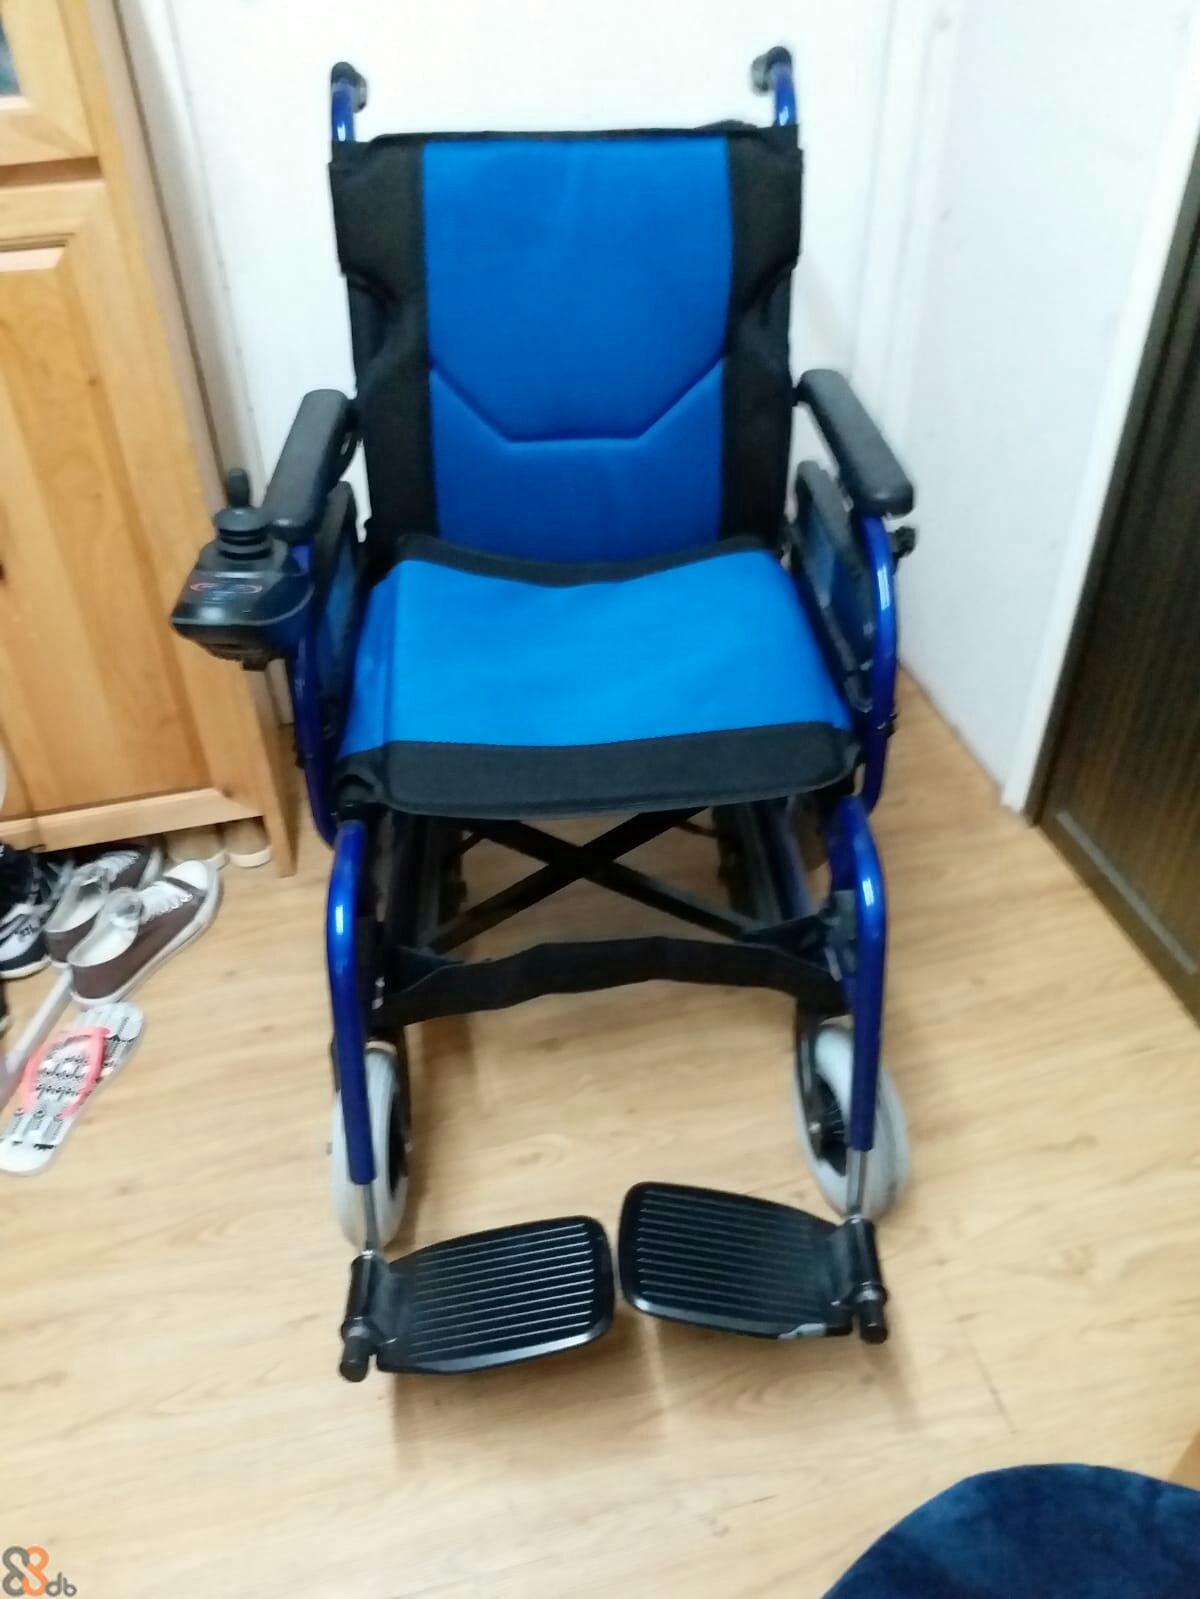  Chair,Product,Motorized wheelchair,Furniture,Cobalt blue